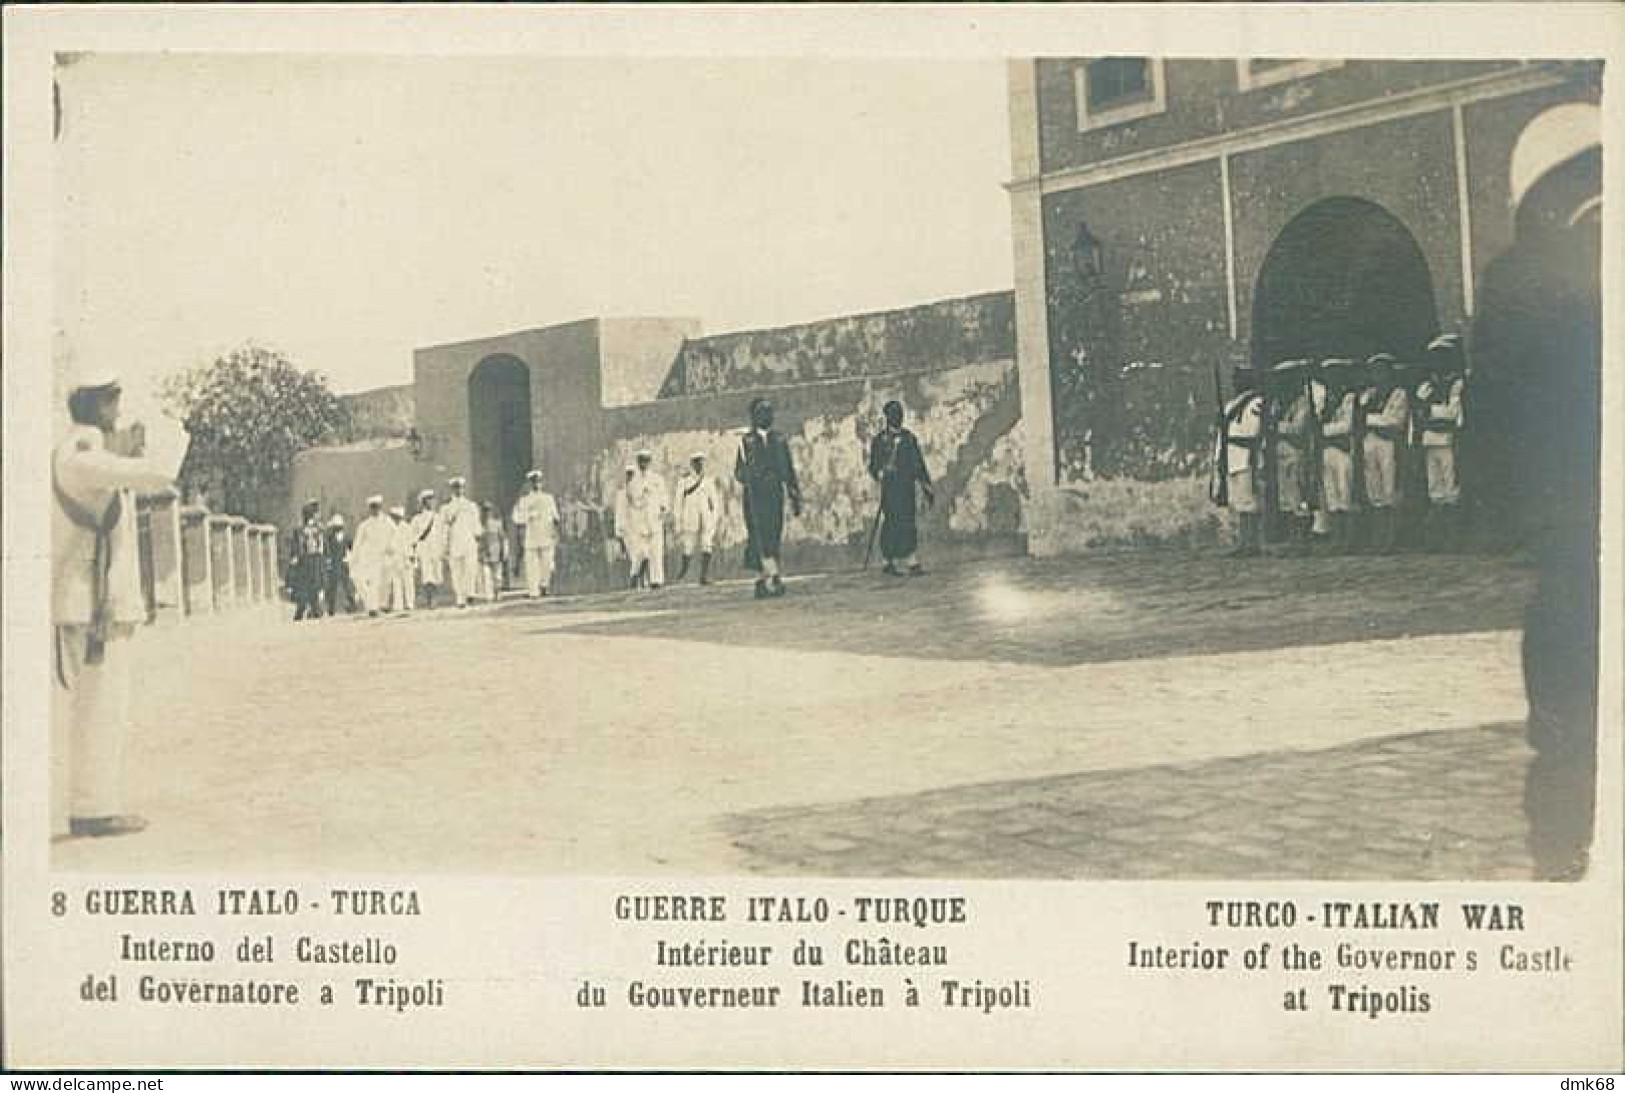 LIBYA / LIBIA - TURKEY / ITALY WAR - INTERIOR OF THE GOVERNOR'S CASTLE AT TRIPOLI - RPPC POSTCARD 1910s (12596) - Libye